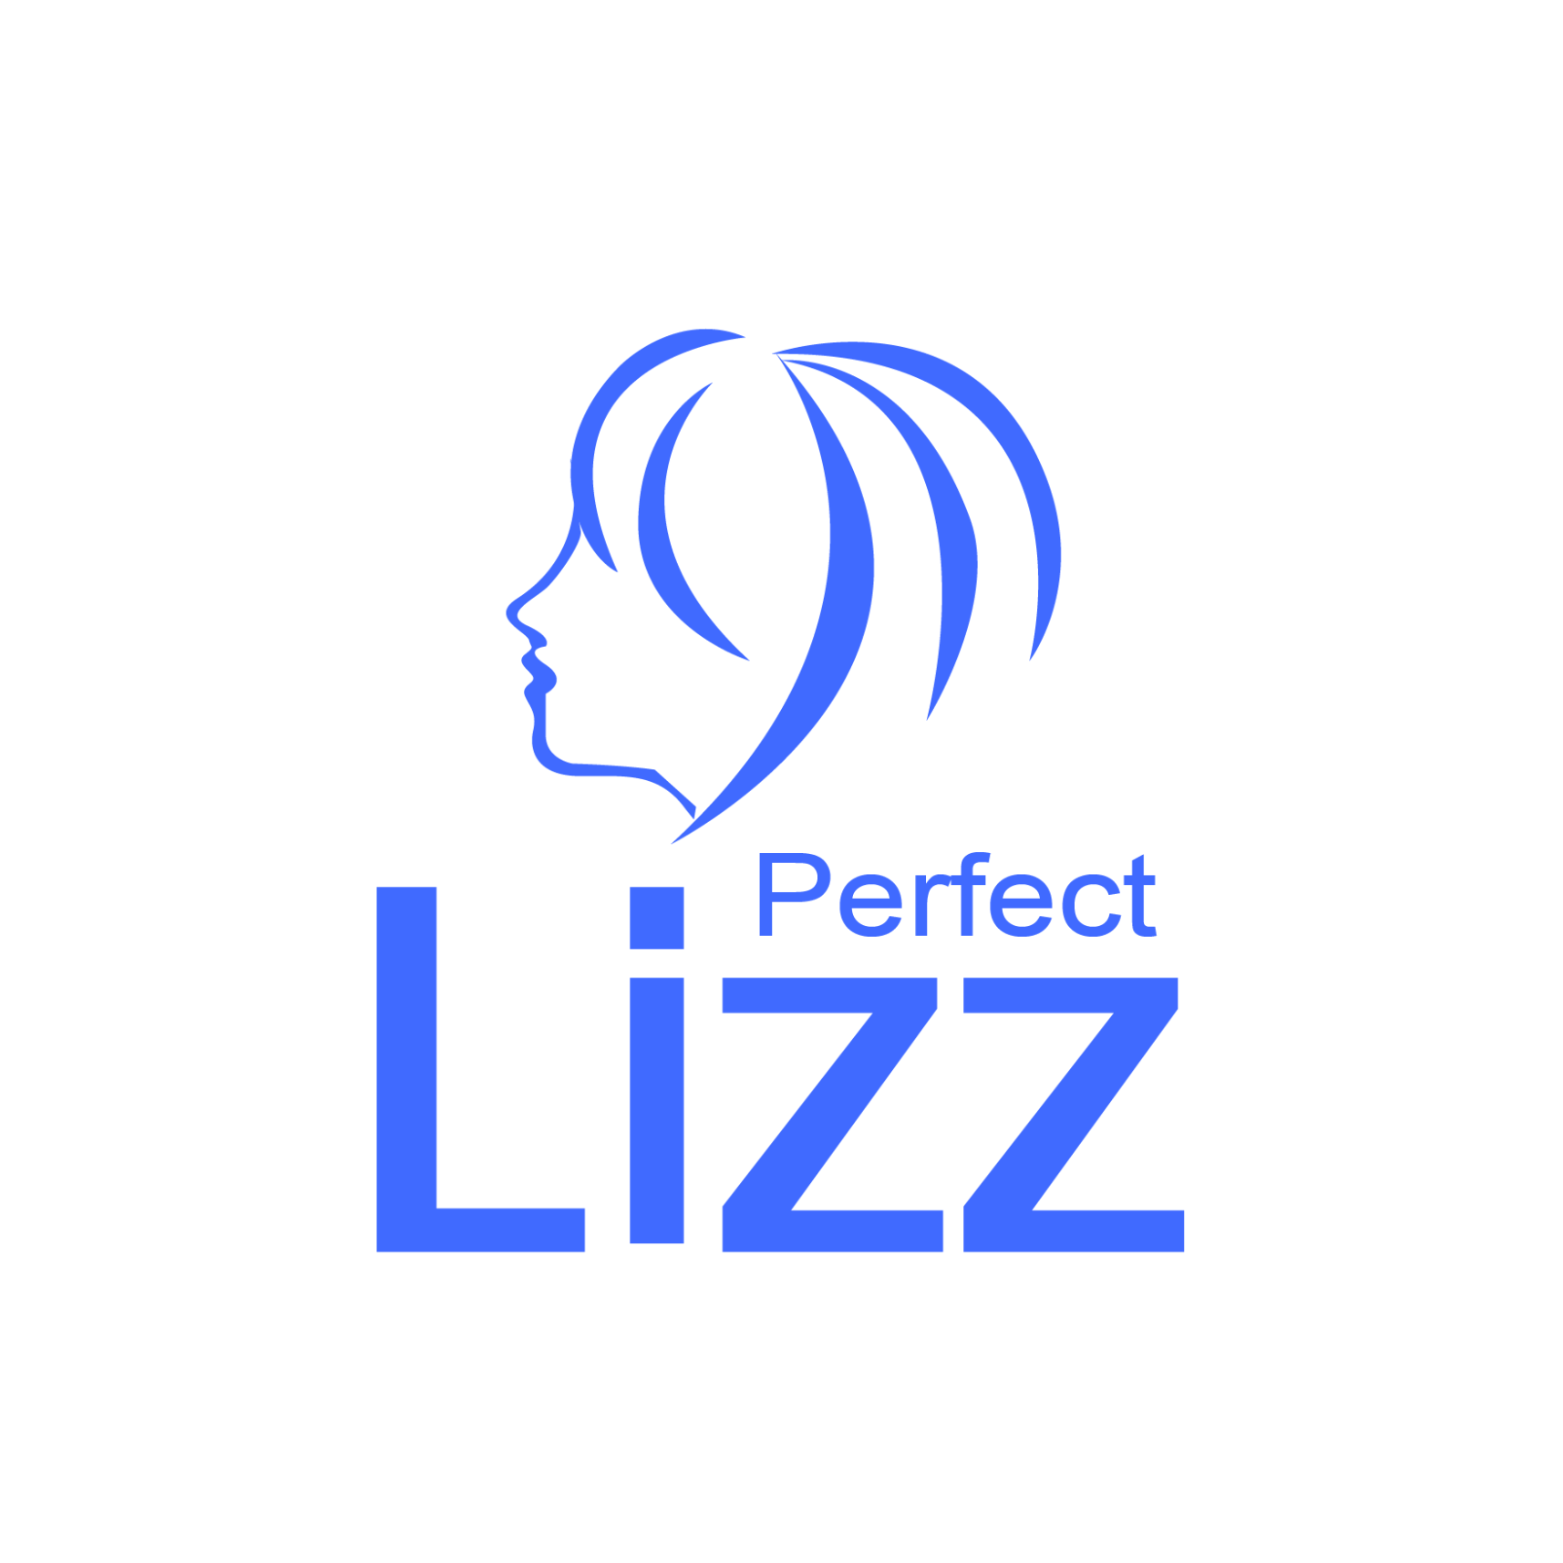 Perfect lizz